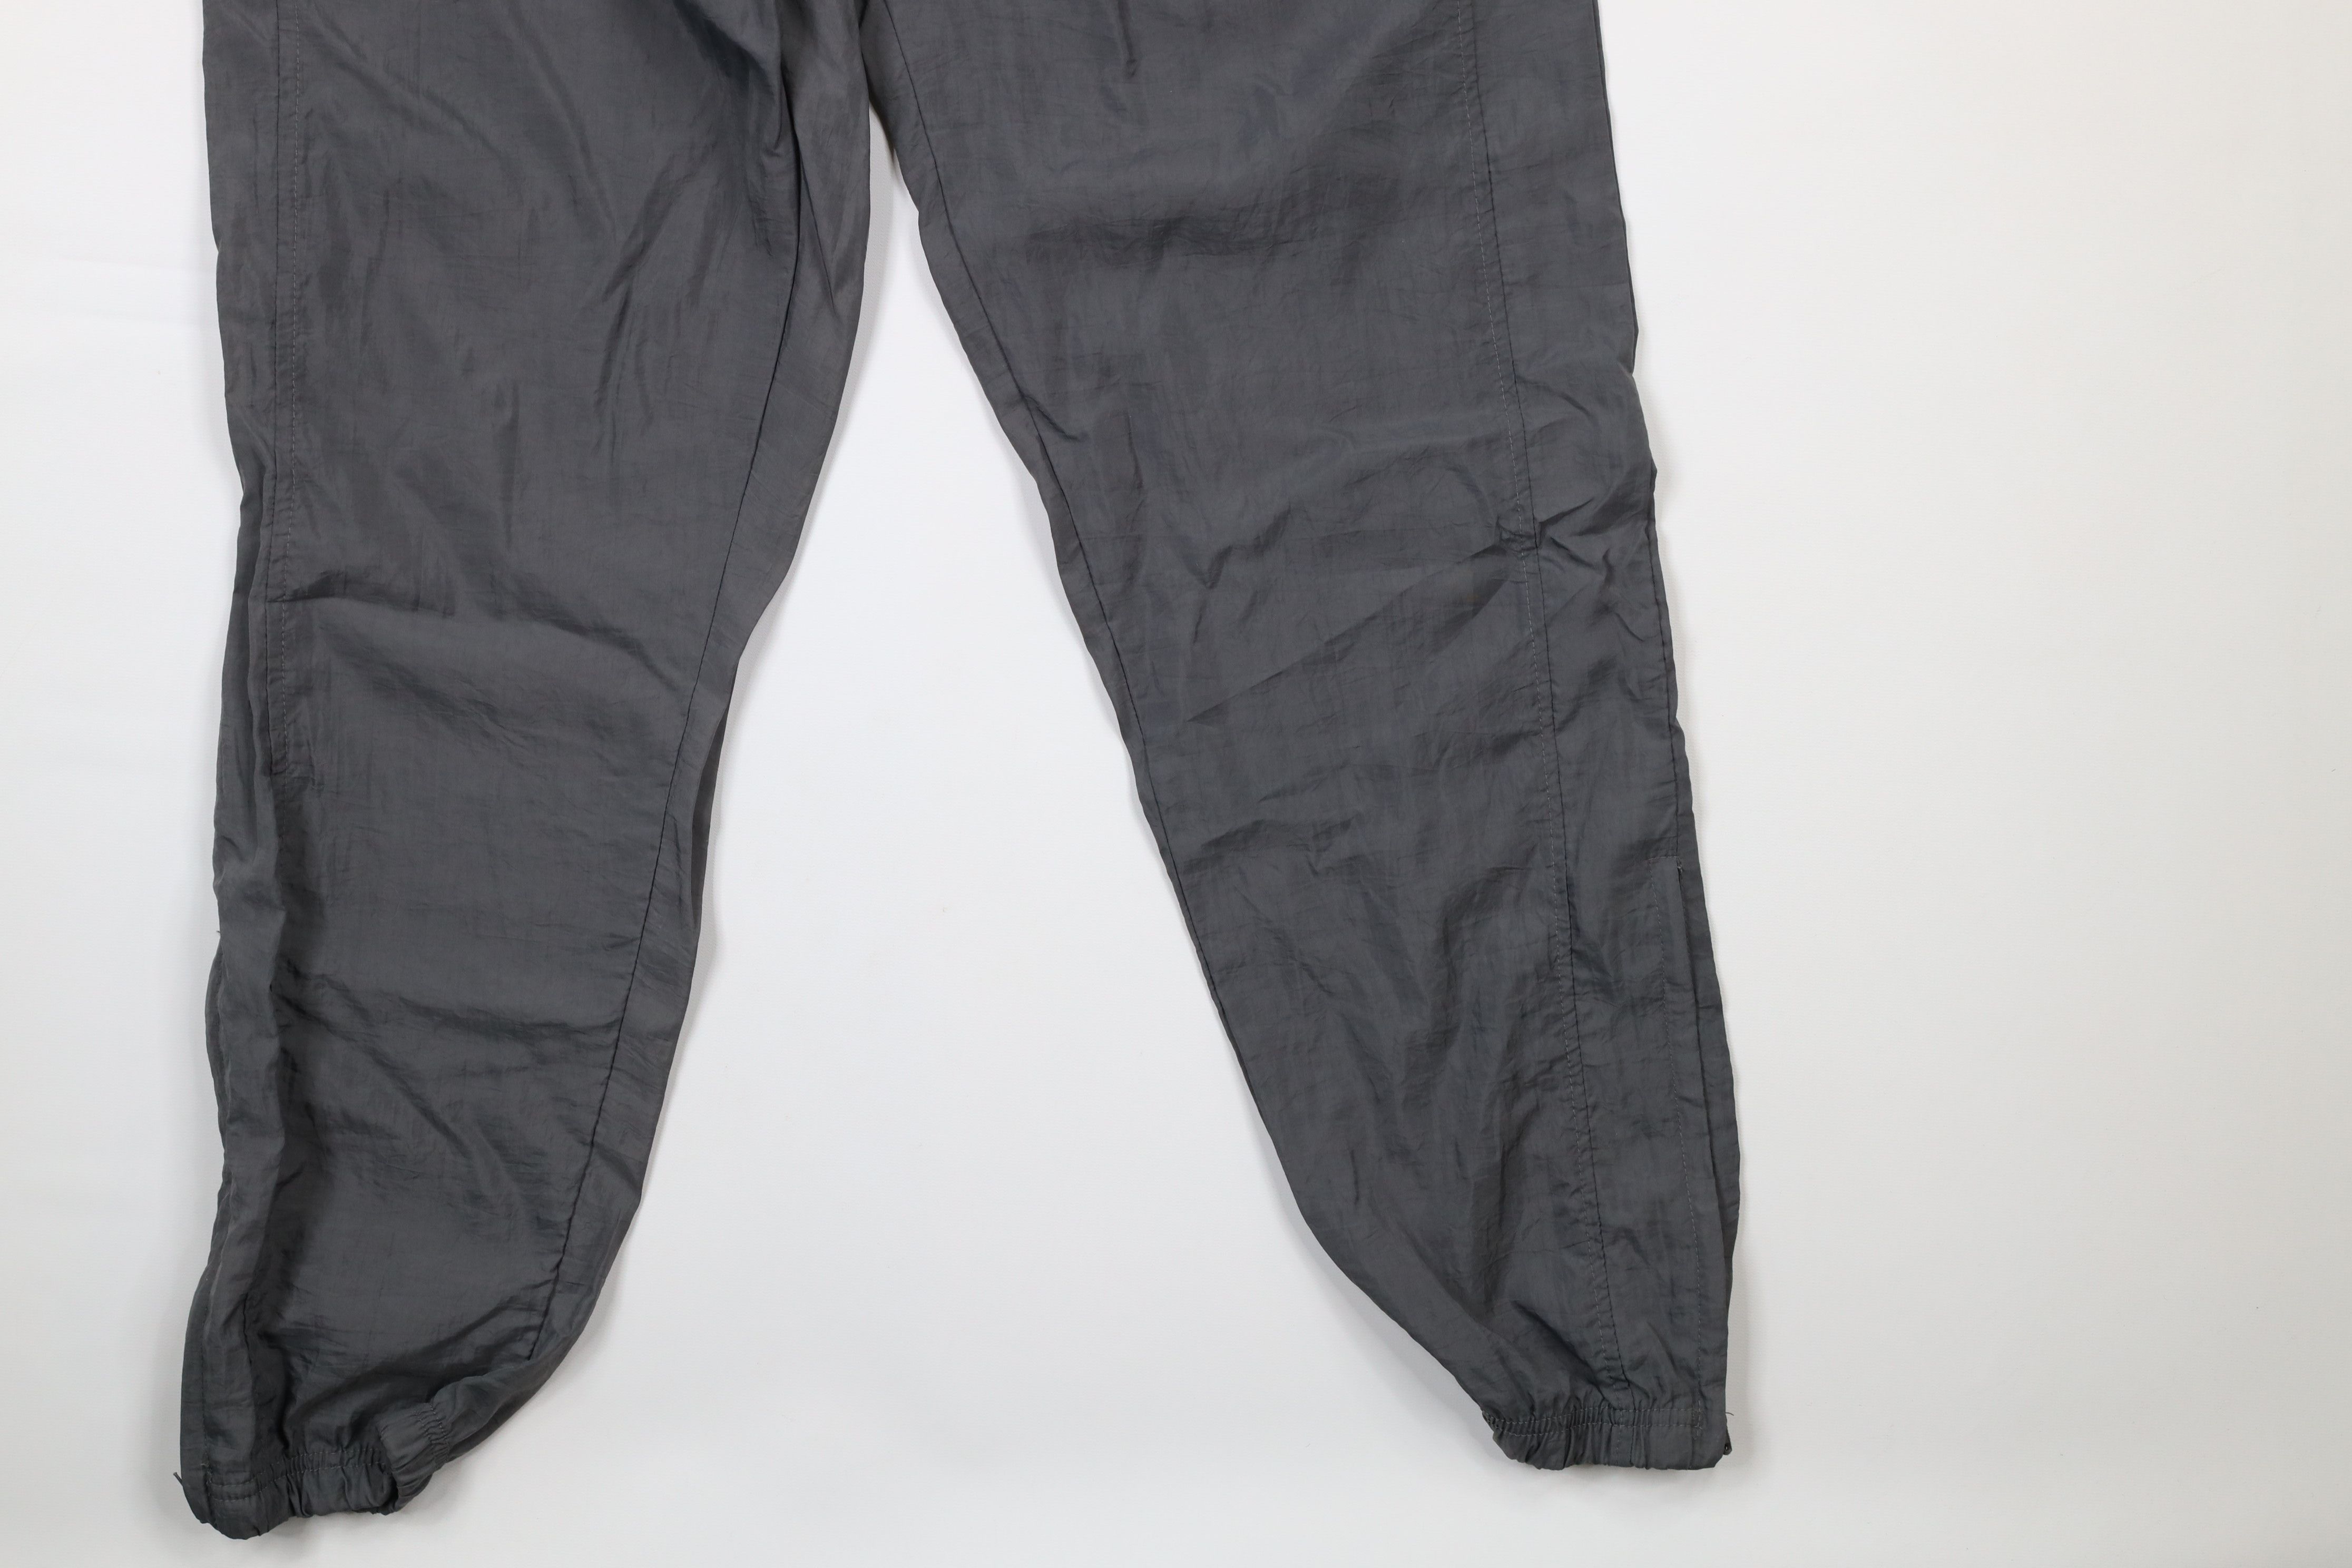 Vintage Vintage 90s Reebok Cuffed Nylon Joggers Jogger Pants Gray Size US 34 / EU 50 - 4 Thumbnail